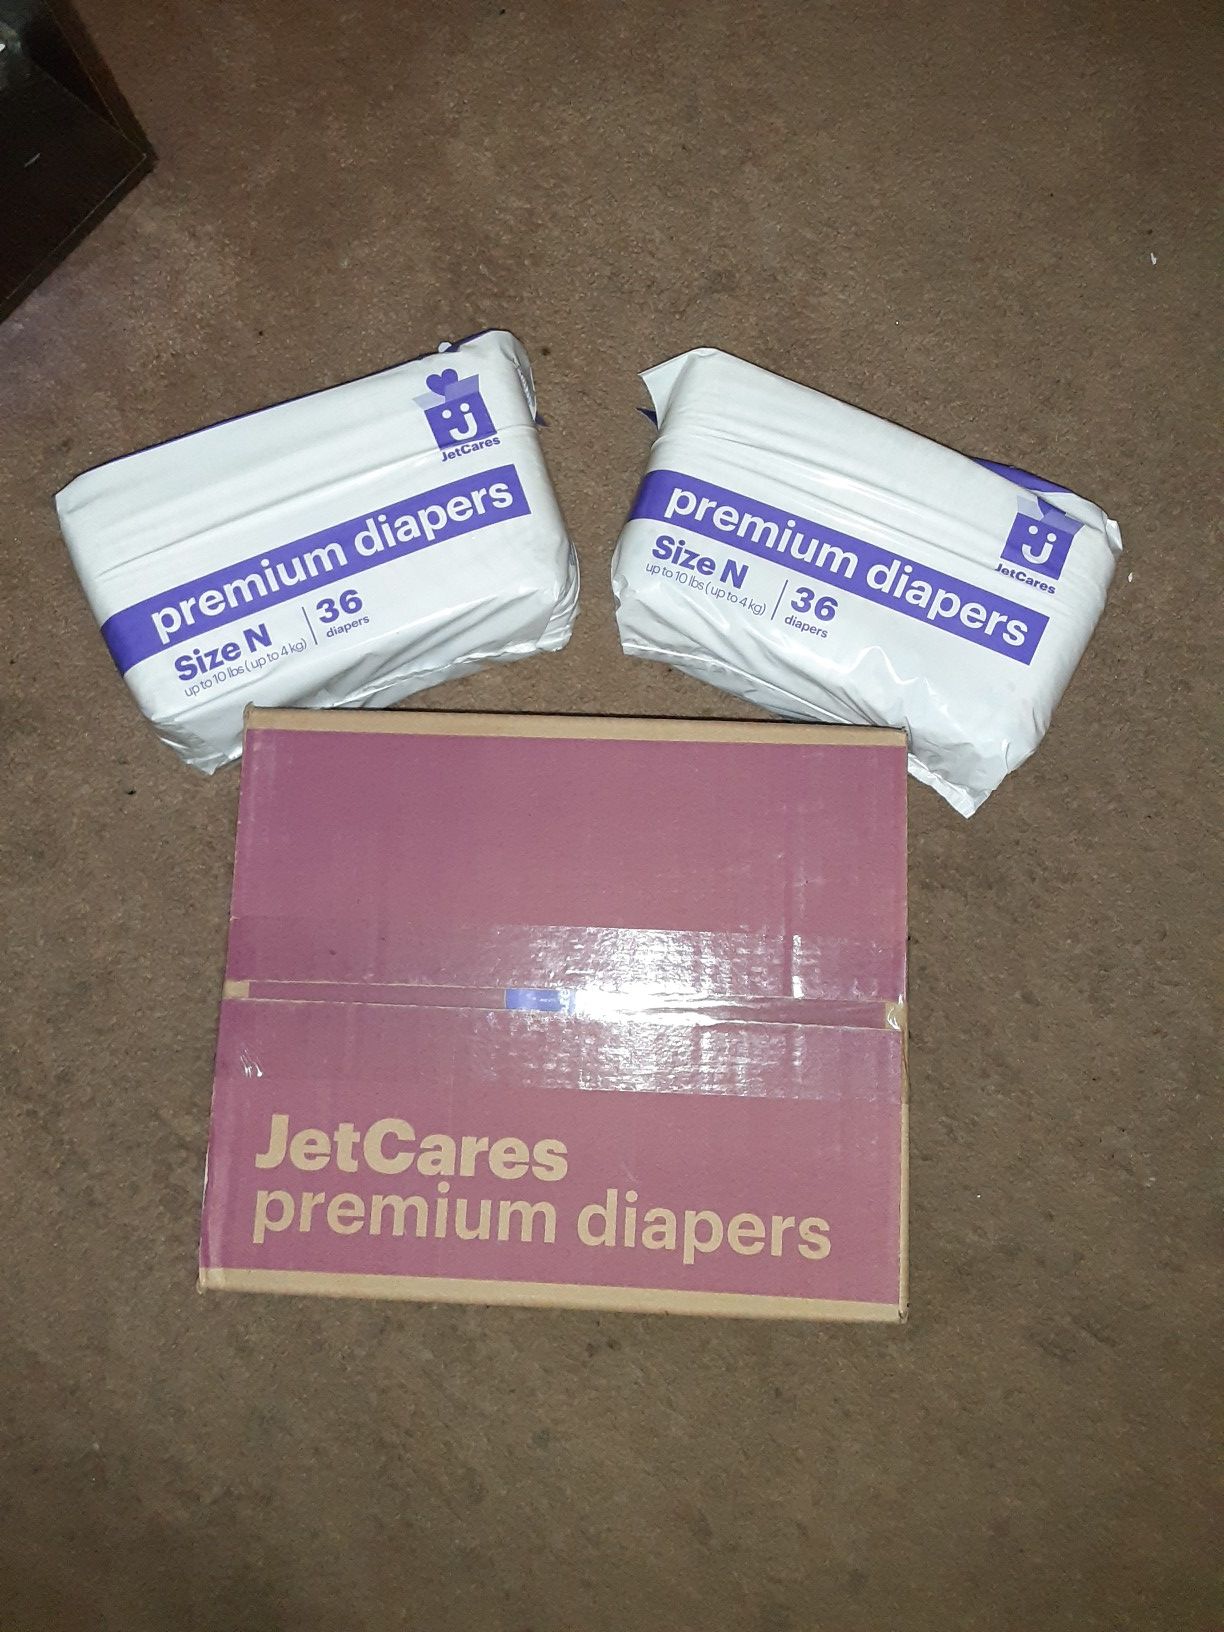 Newborn size diapers-180ct